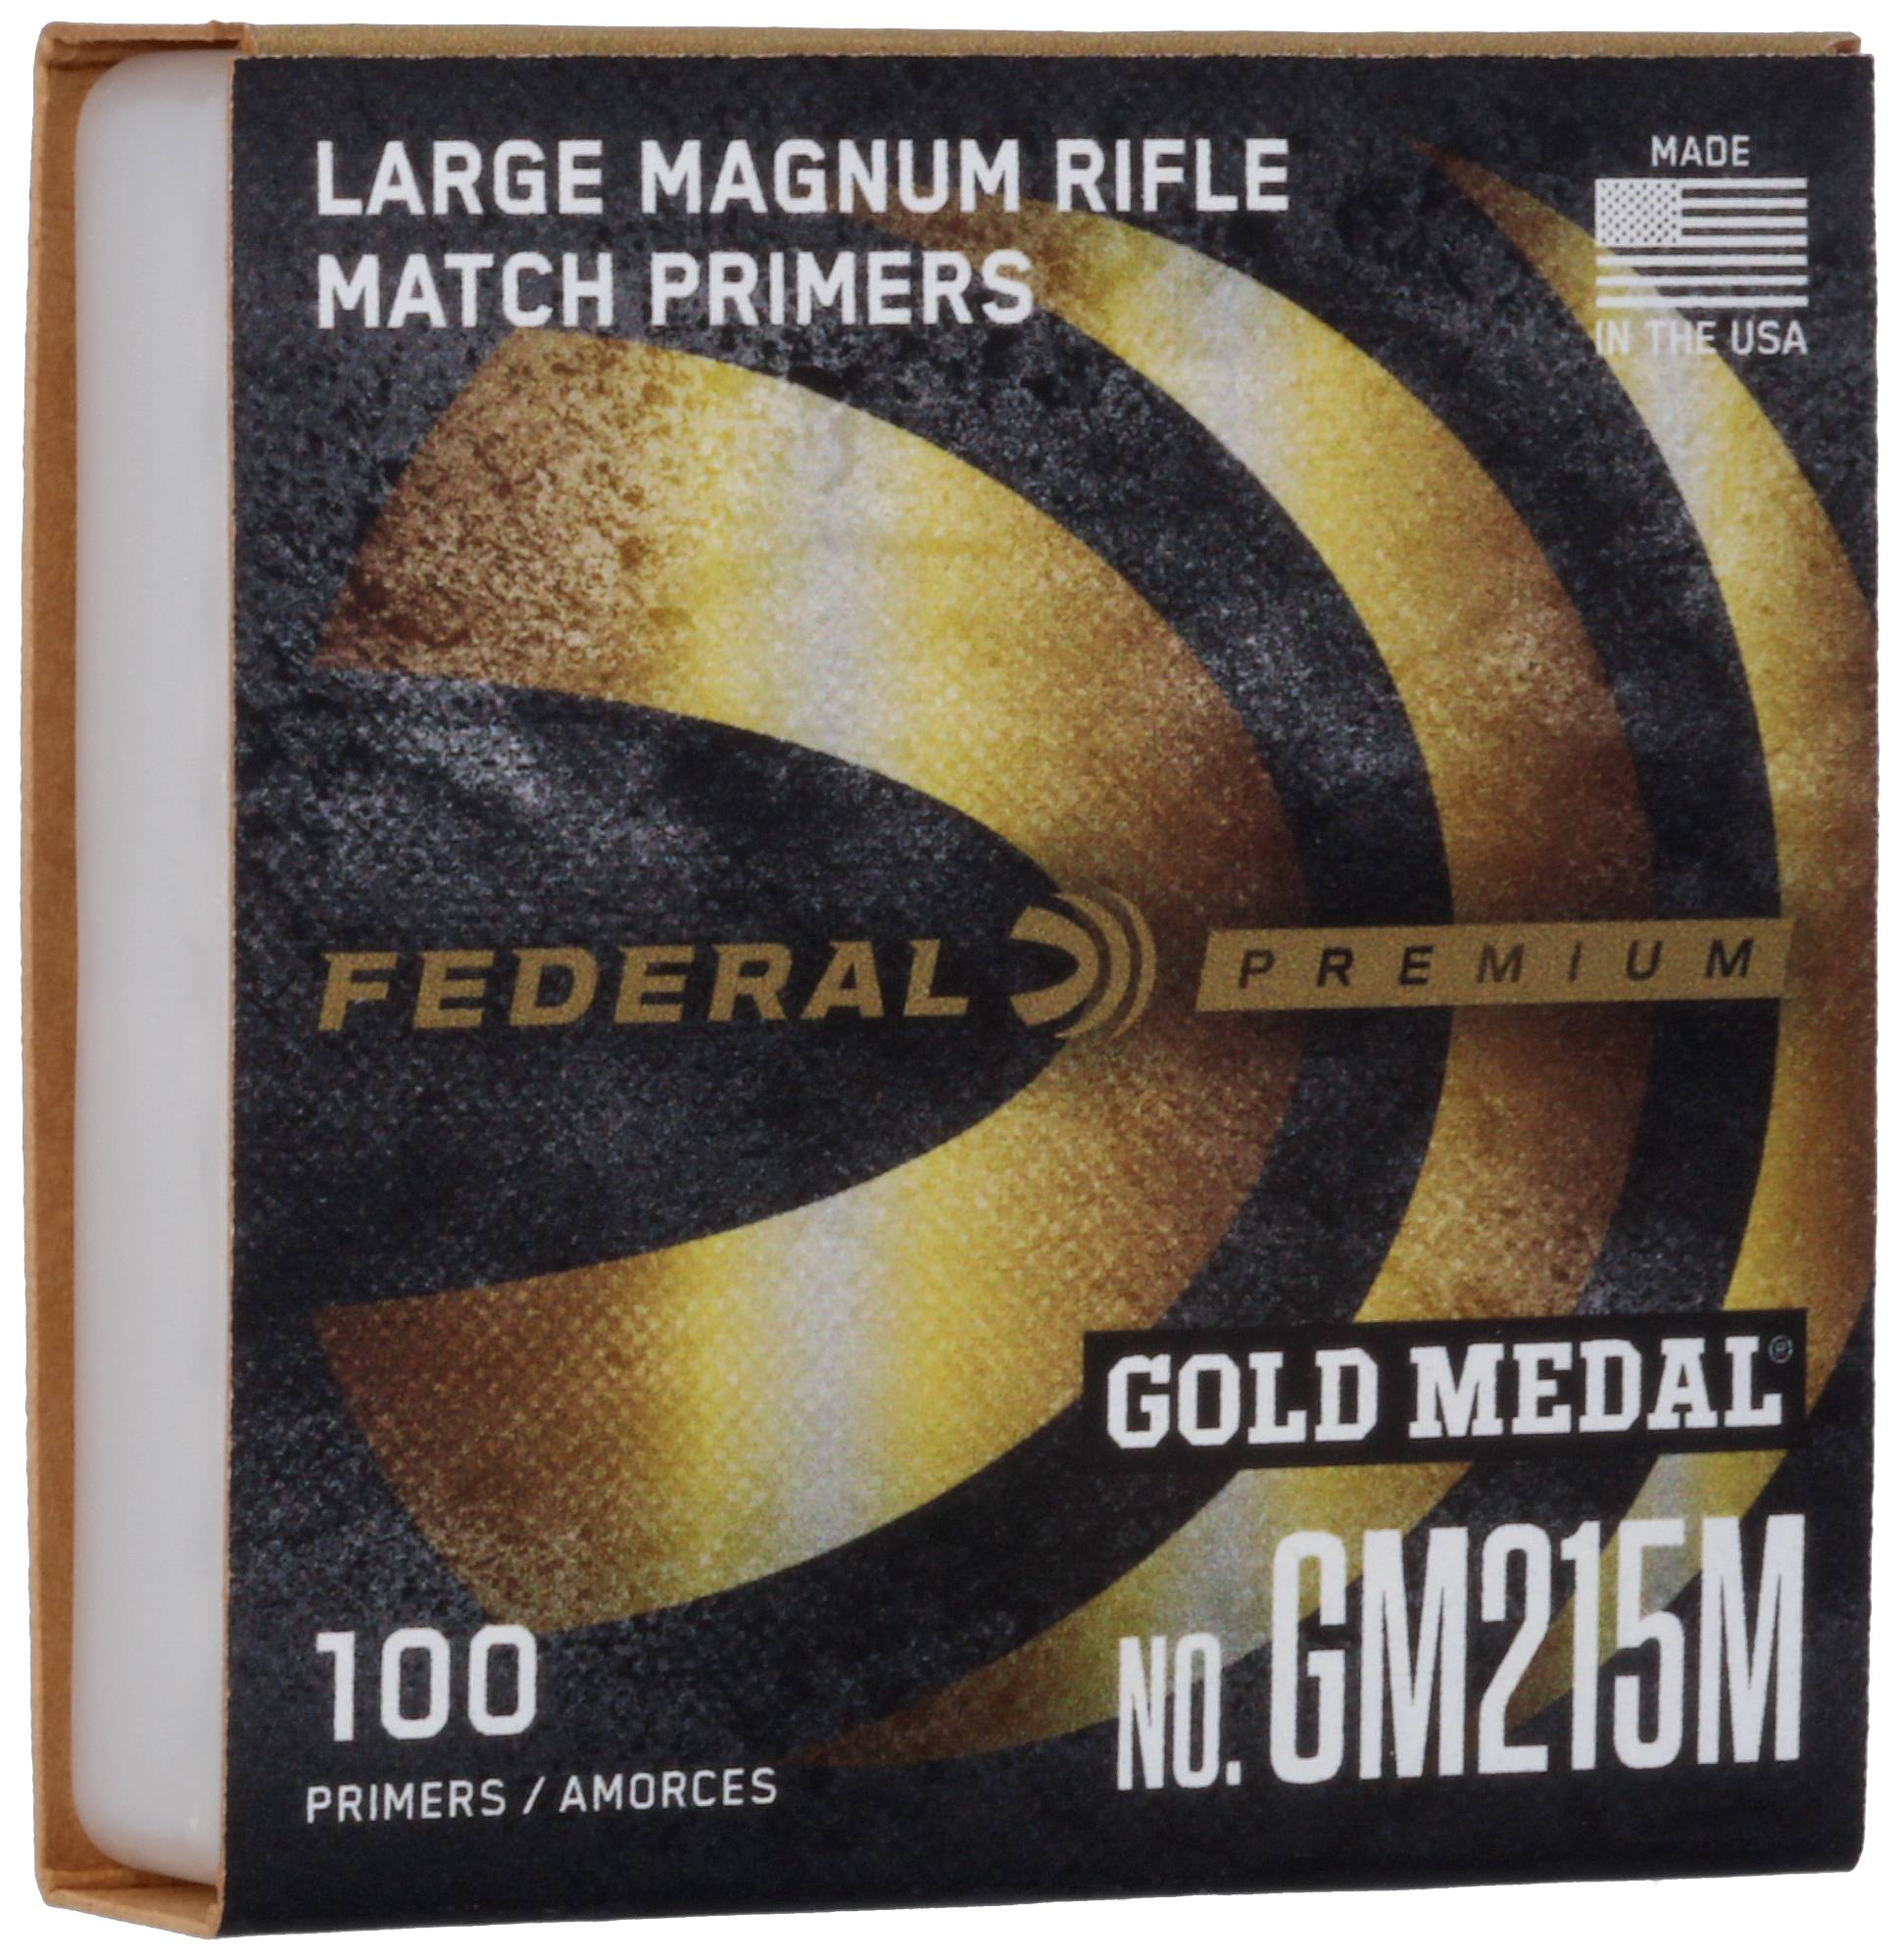 Buy Gold Medal Centerfire Primer for USD 8.99 | Federal Ammunition